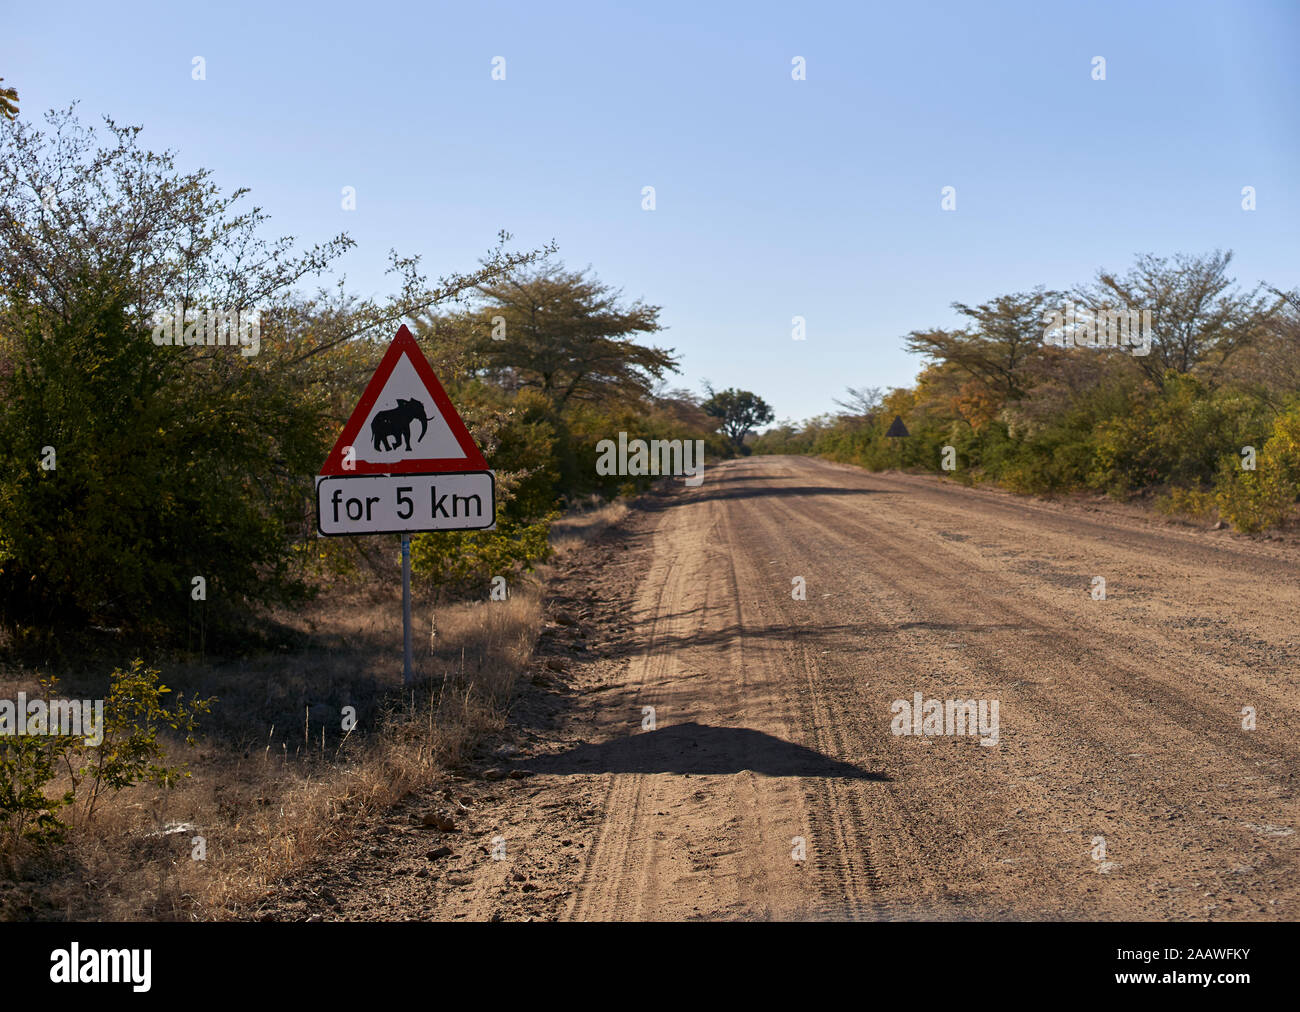 Beware of elephants sign by dirt road at Bwabwata National Park, Namibia Stock Photo